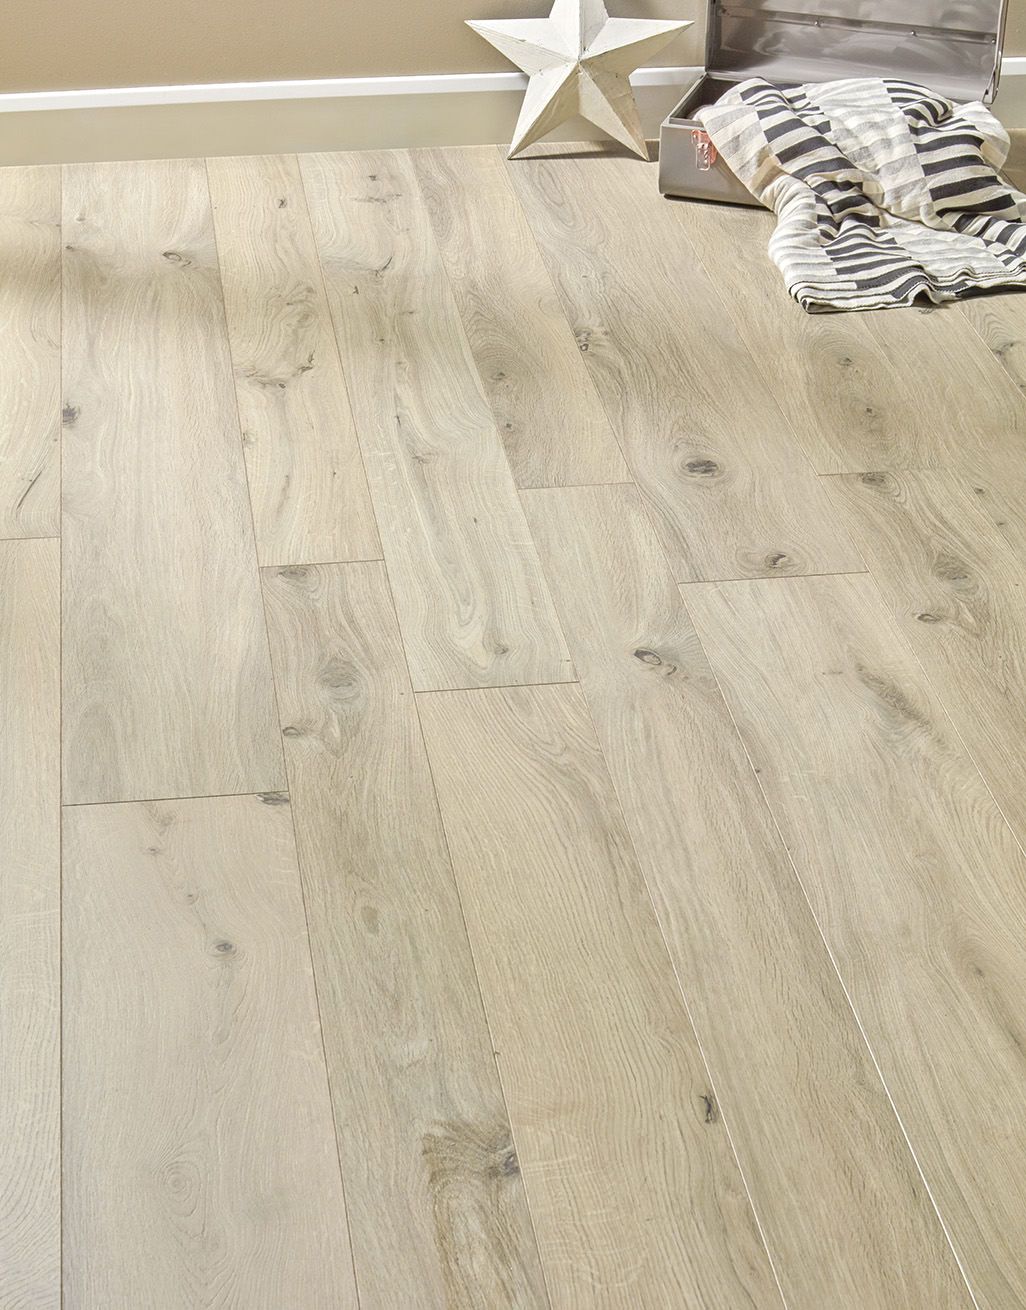 Natural Forester Oak Laminate Flooring, Grey Barnwood Laminate Flooring